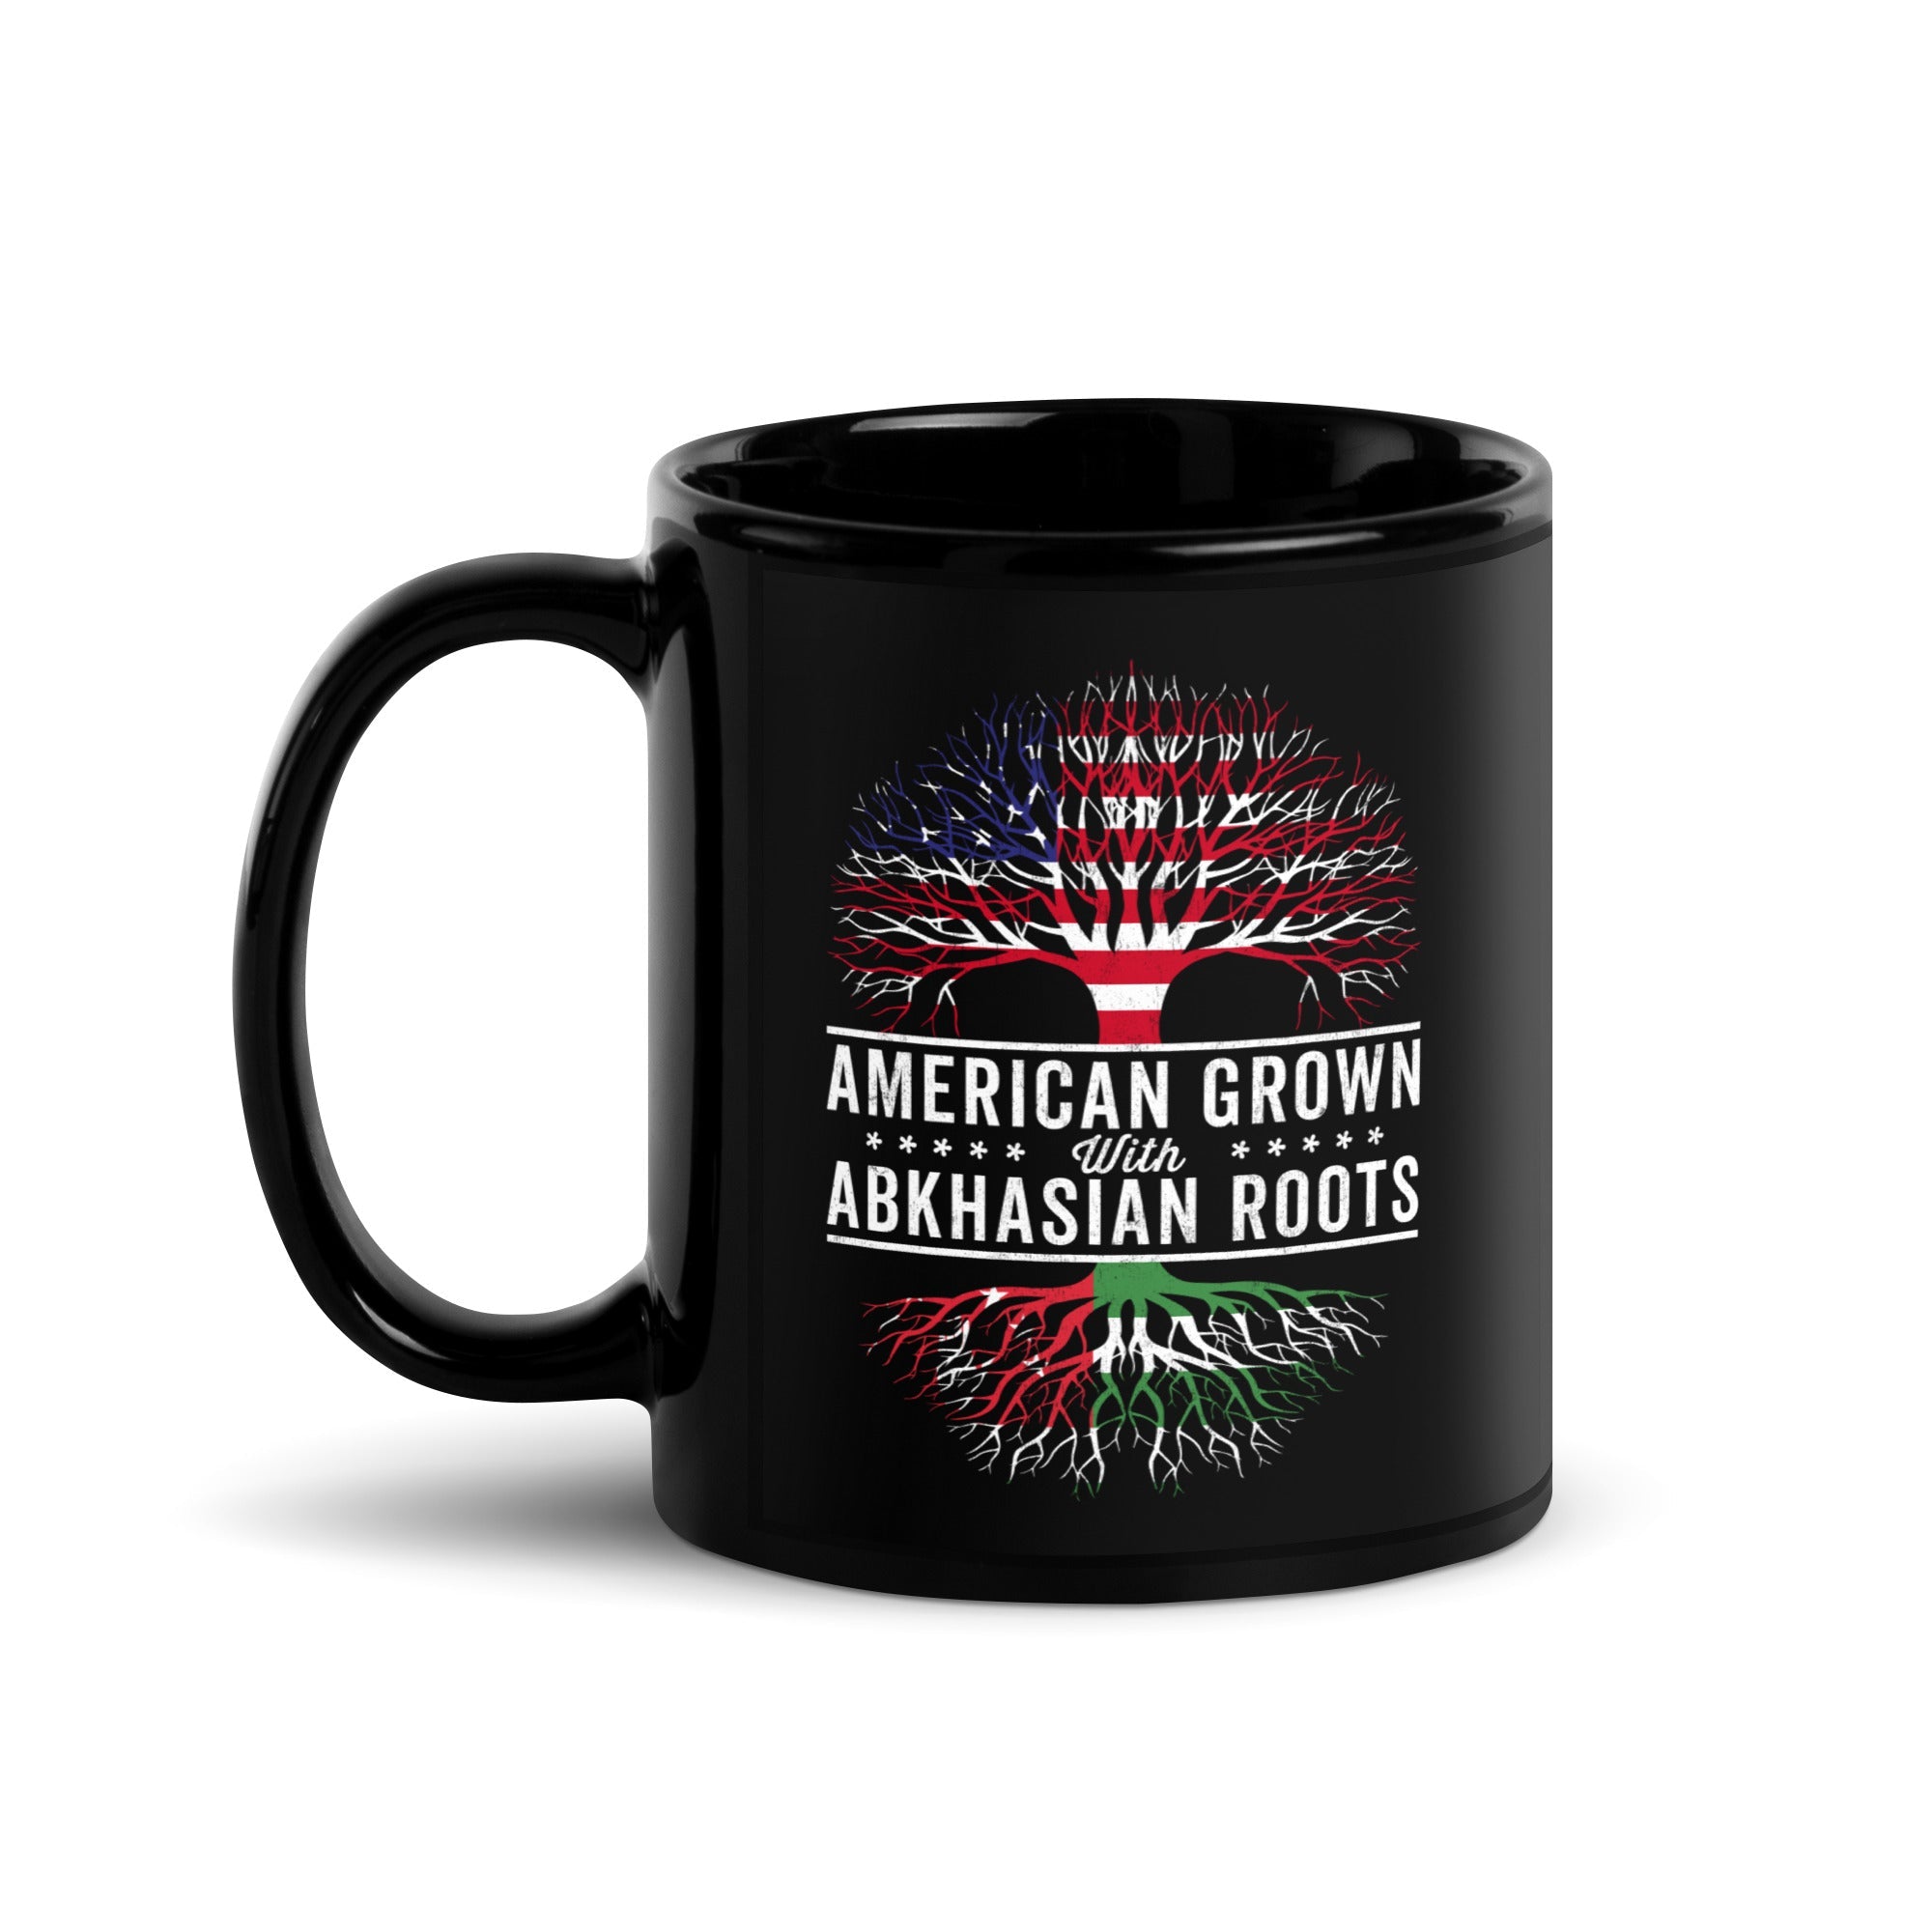 American Grown Abkhasian Roots Flag Mug